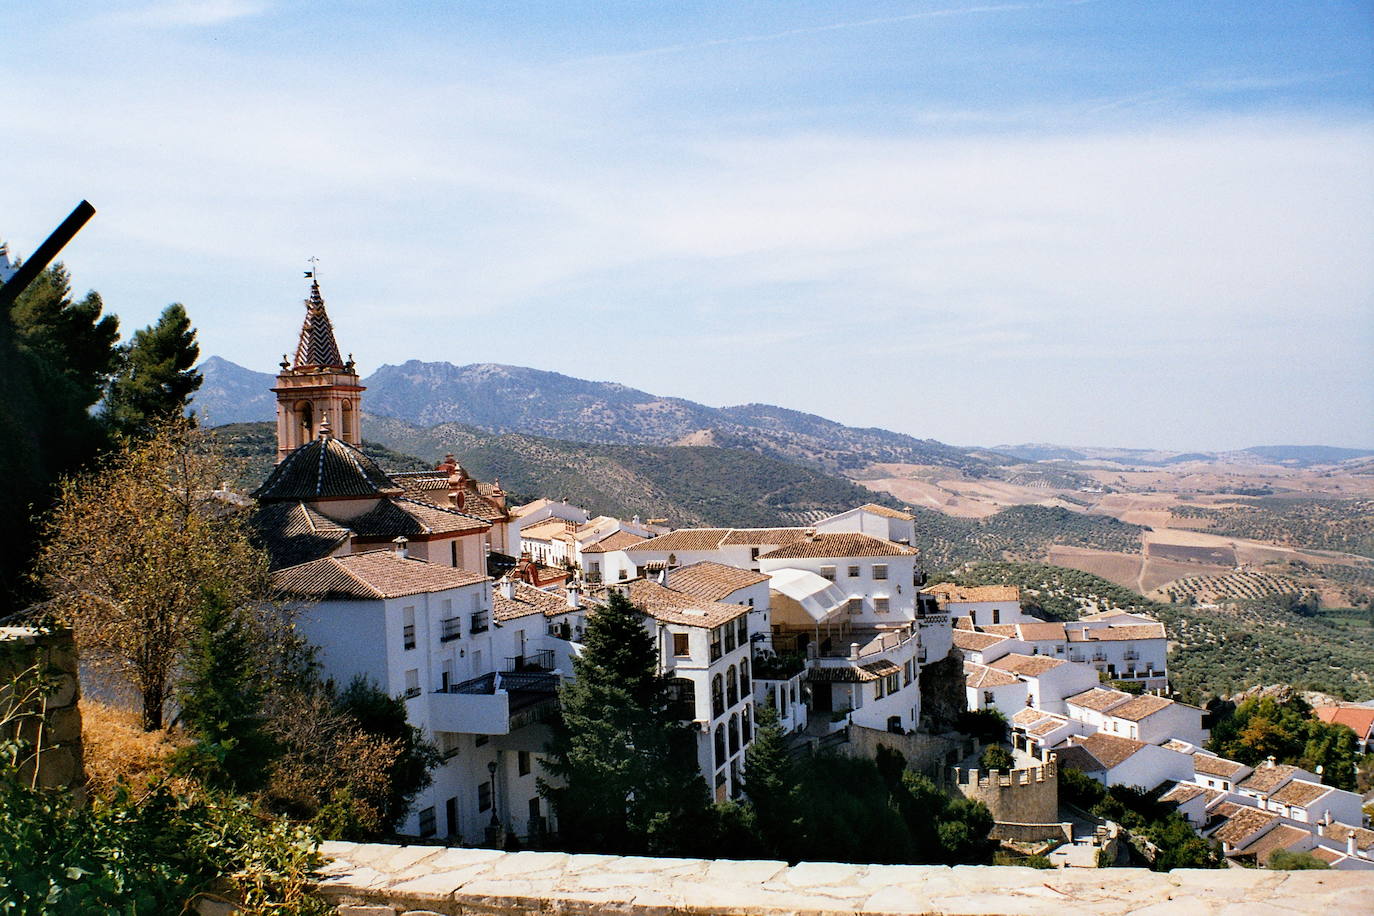 50 cosas increíbles que ver en España